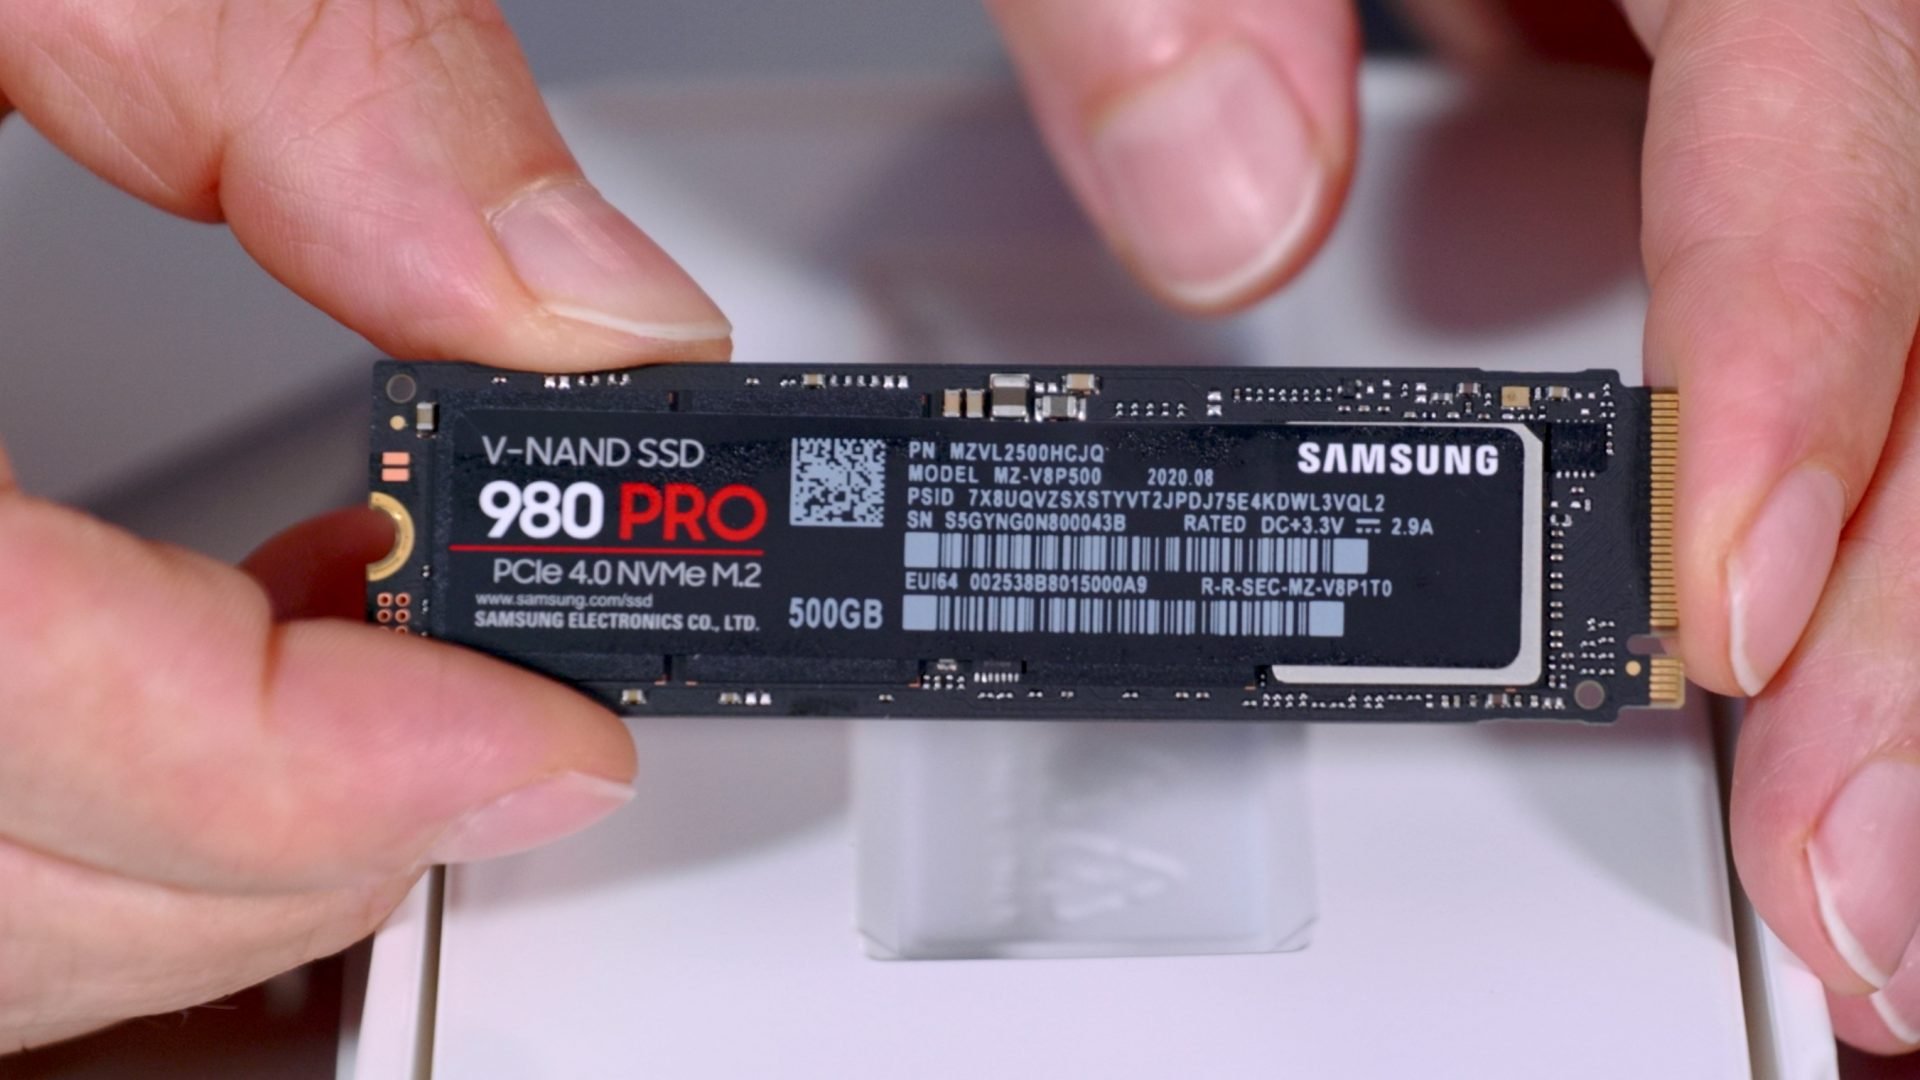 Samsung-980-PRO-NVMe-M.2-SSD-1920x1080.jpg